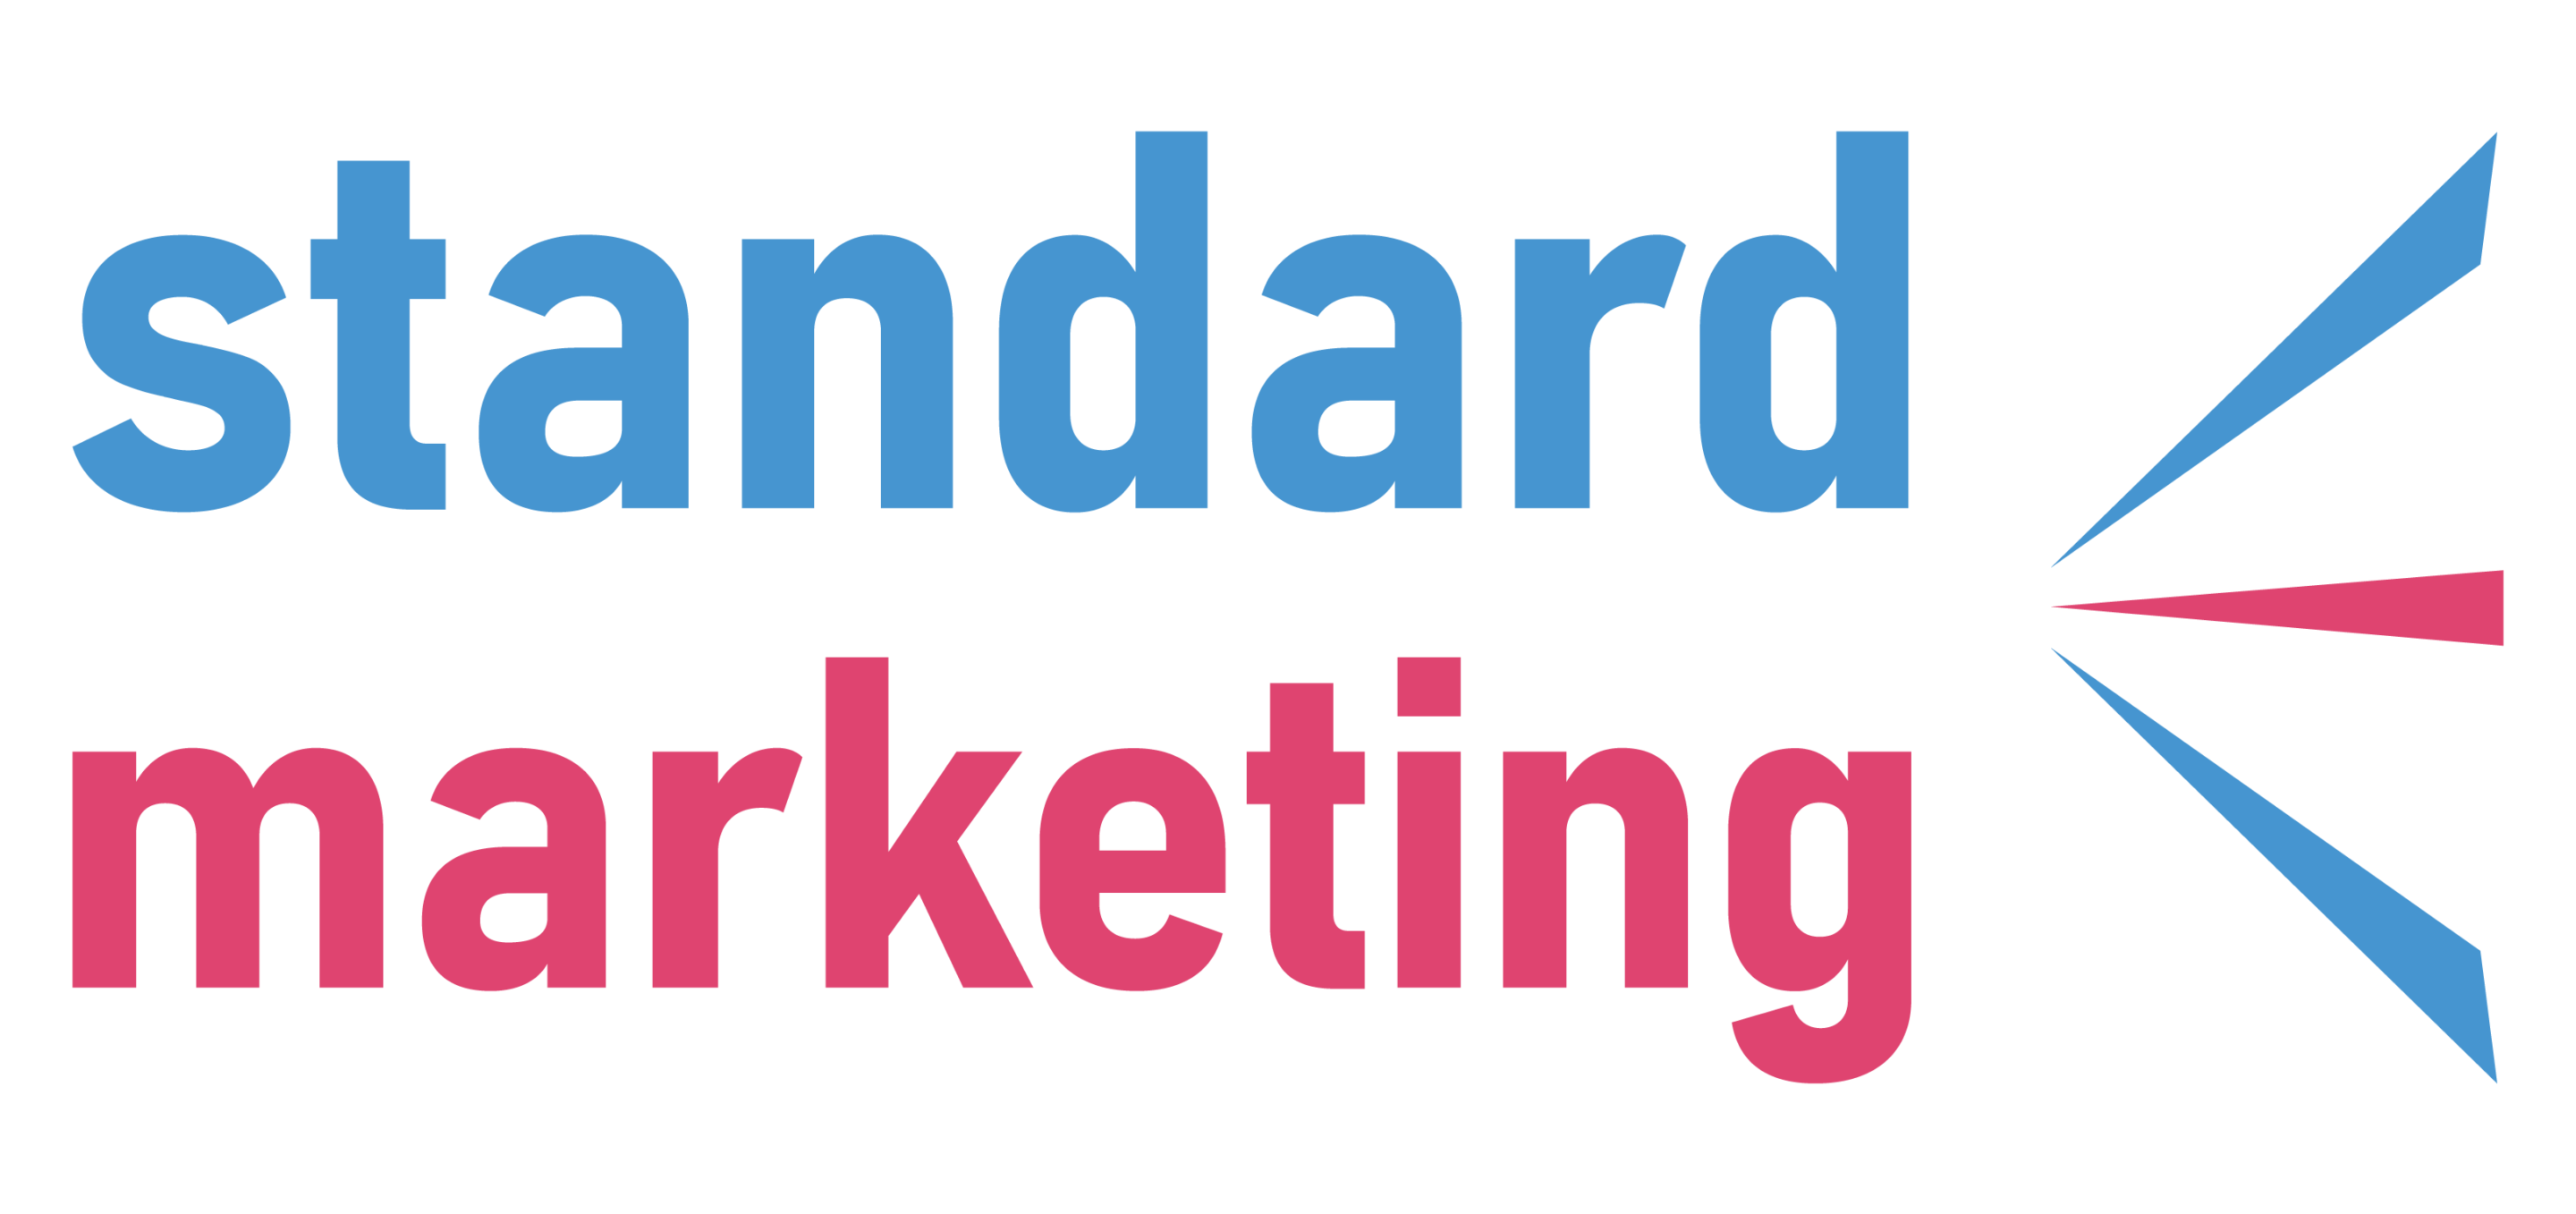 Standard Marketing - Hamilton based Marketing agency